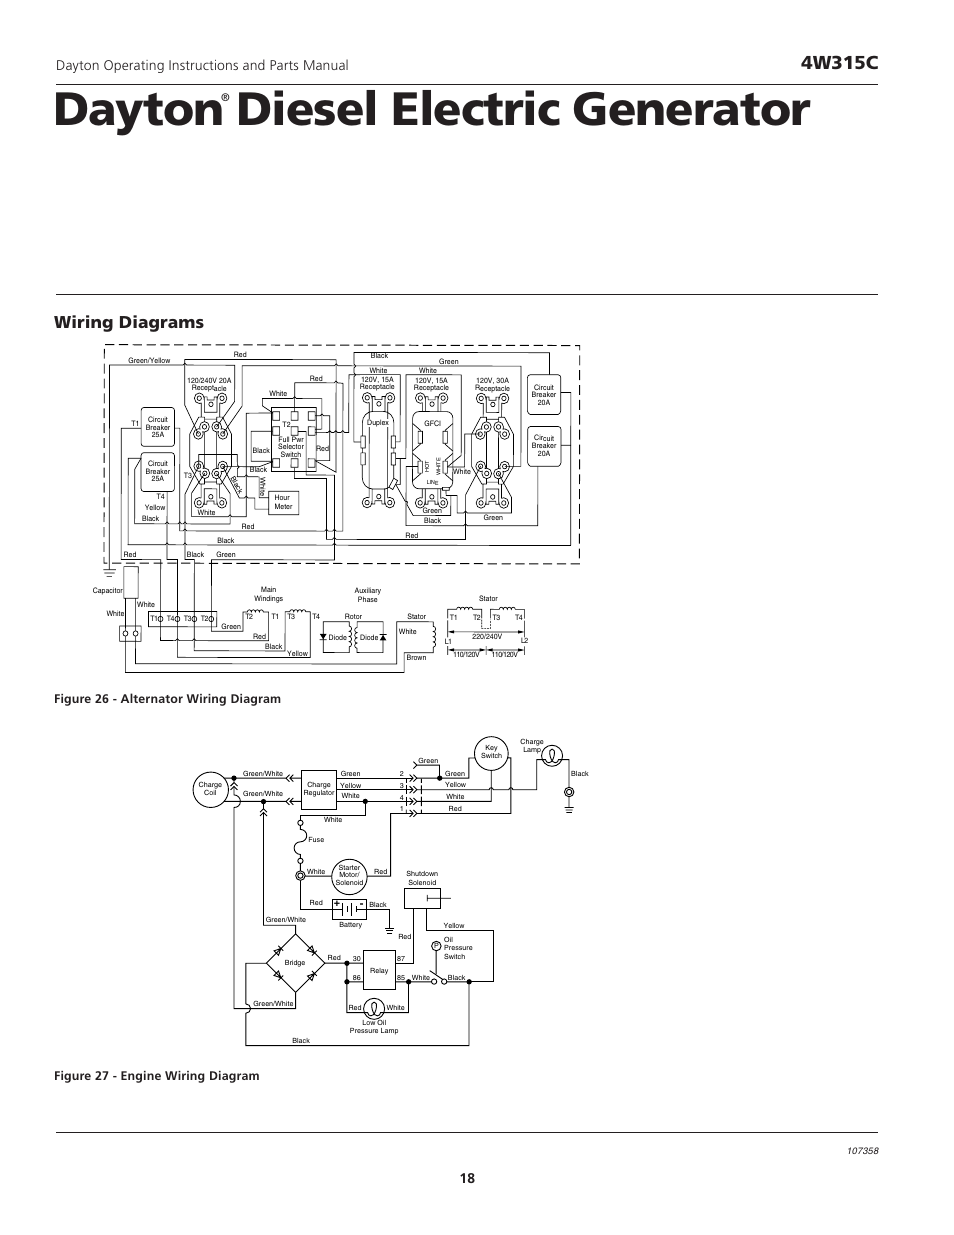 Dayton diesel electric generator, 4w315c, Wiring diagrams | Dayton operating instructions and parts manual 18, Figure 26 - alternator wiring diagram, Figure 27 - engine wiring diagram | VDO Dayton 4W315C User Manual | Page 18 / 28